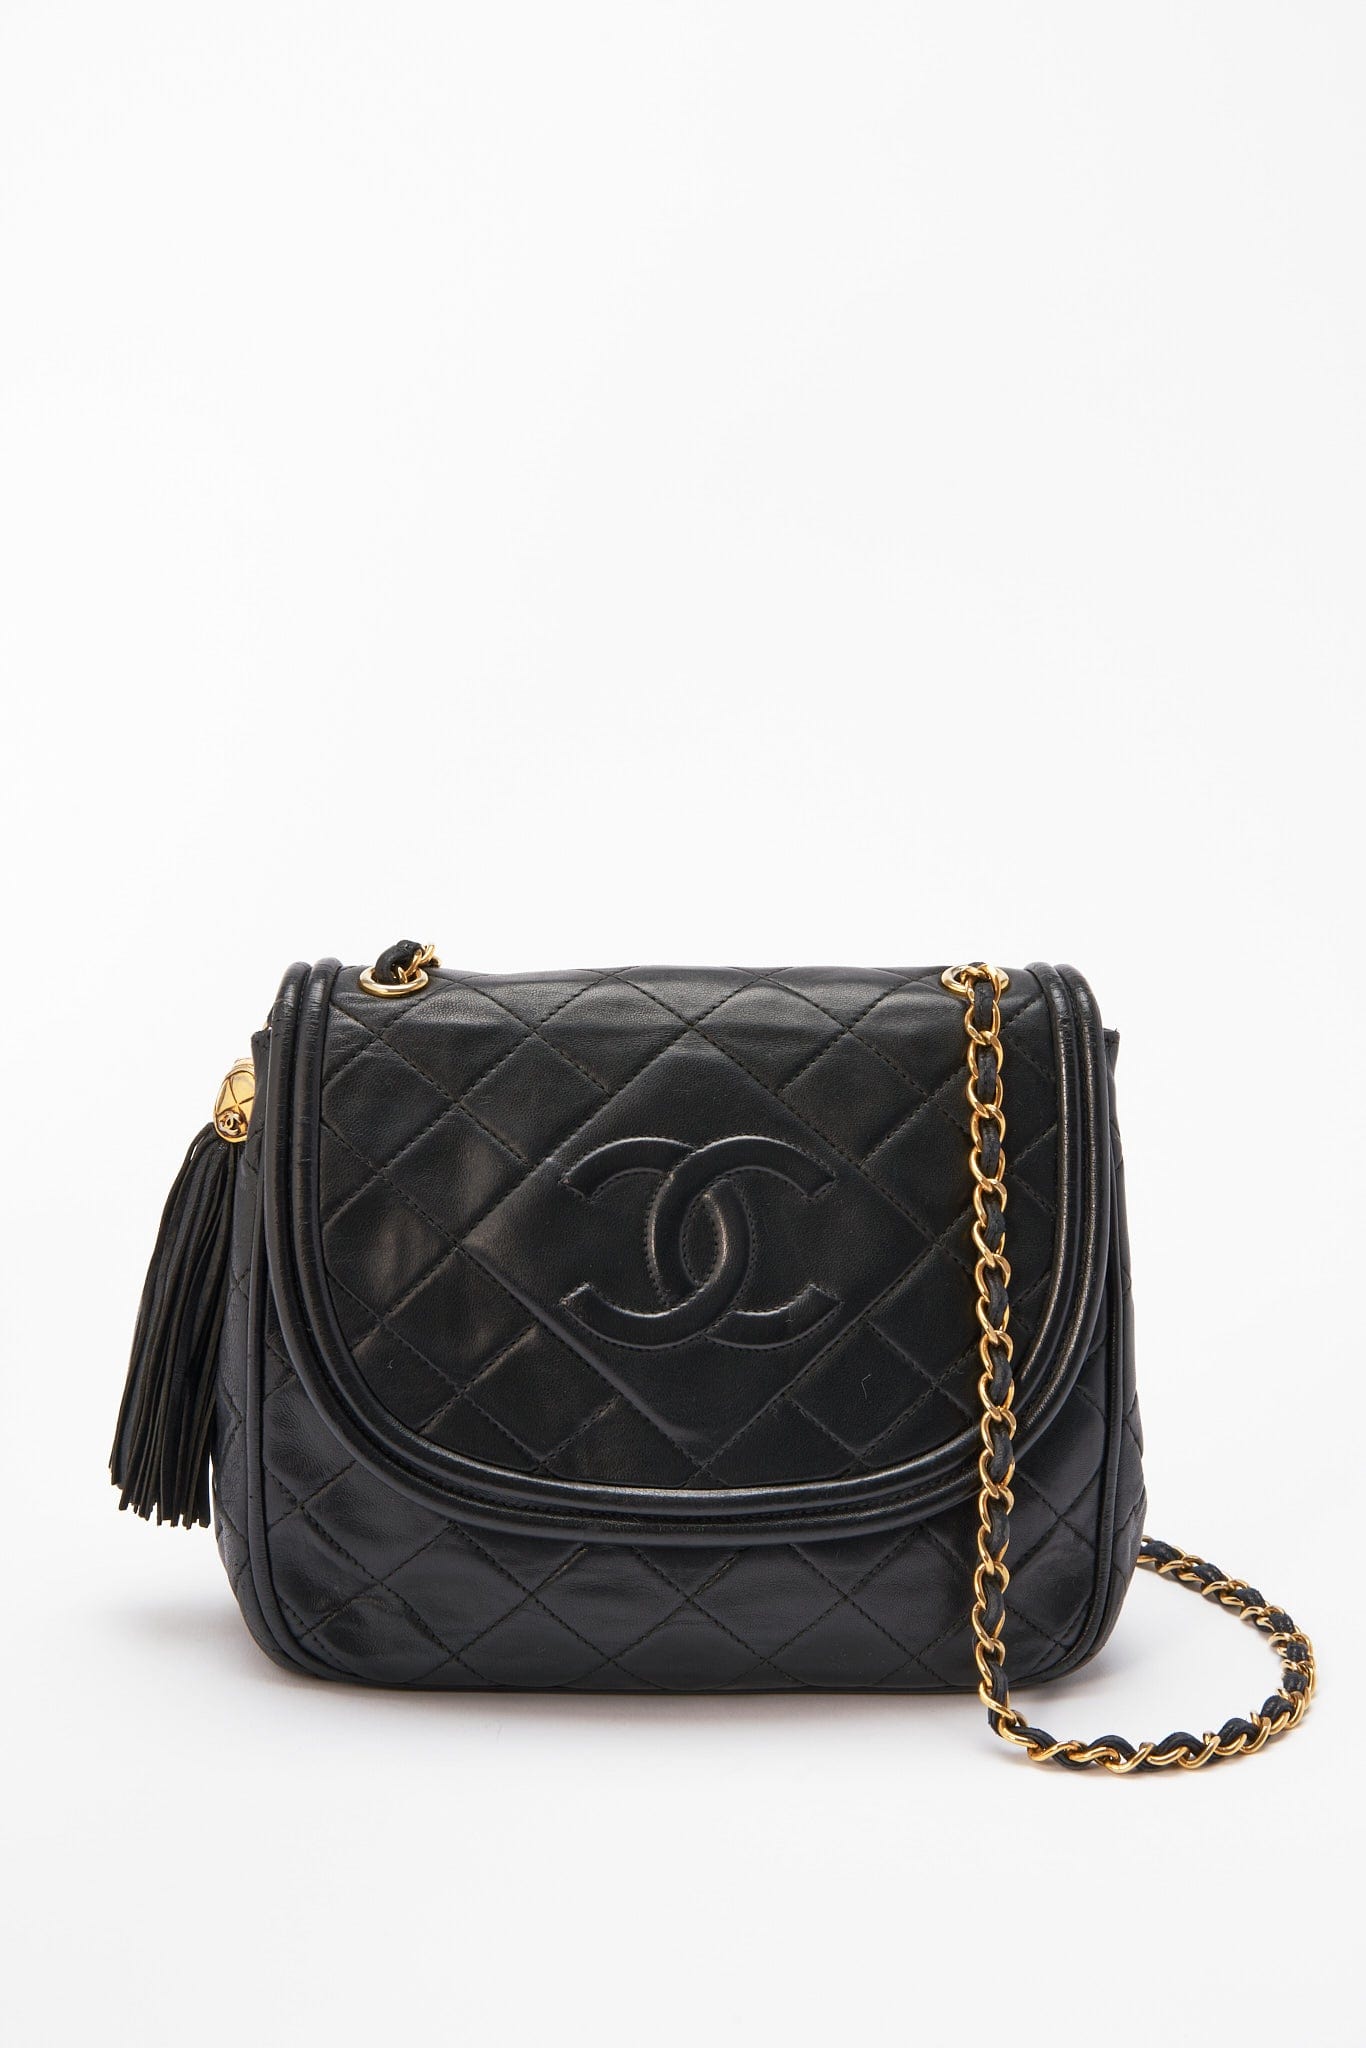 CHANEL, Bags, Brand New Chanel 9 Handbag Lambskin Quilted Medium Flap